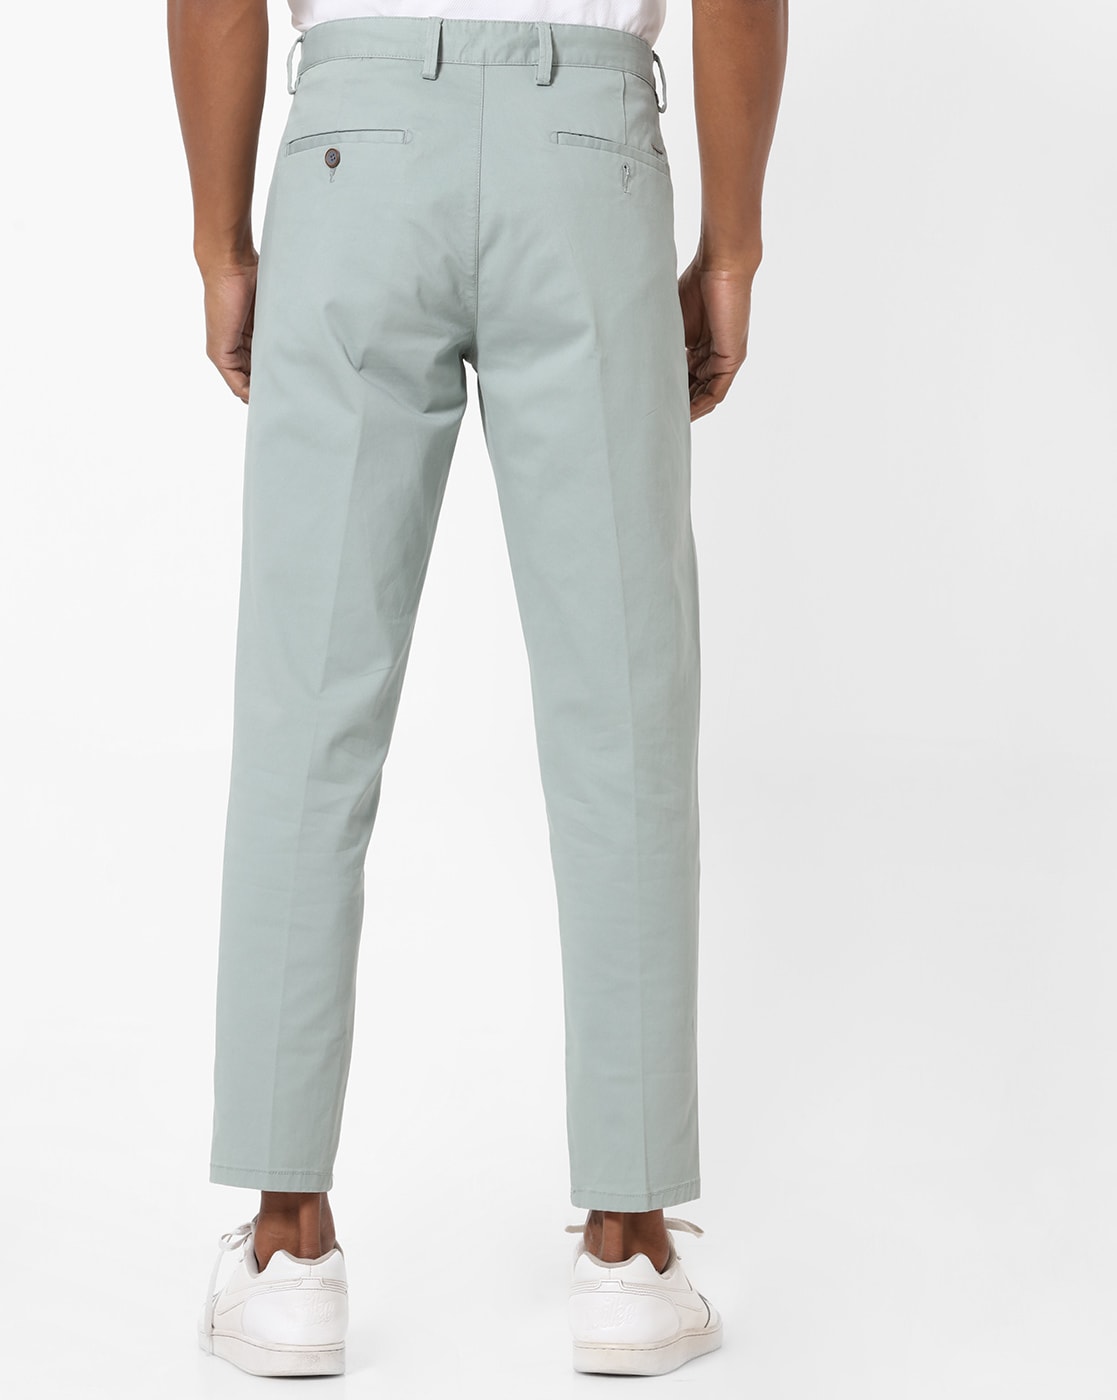 Buy Men Khaki Solid Super Slim Fit Casual Trousers Online  757386  Peter  England